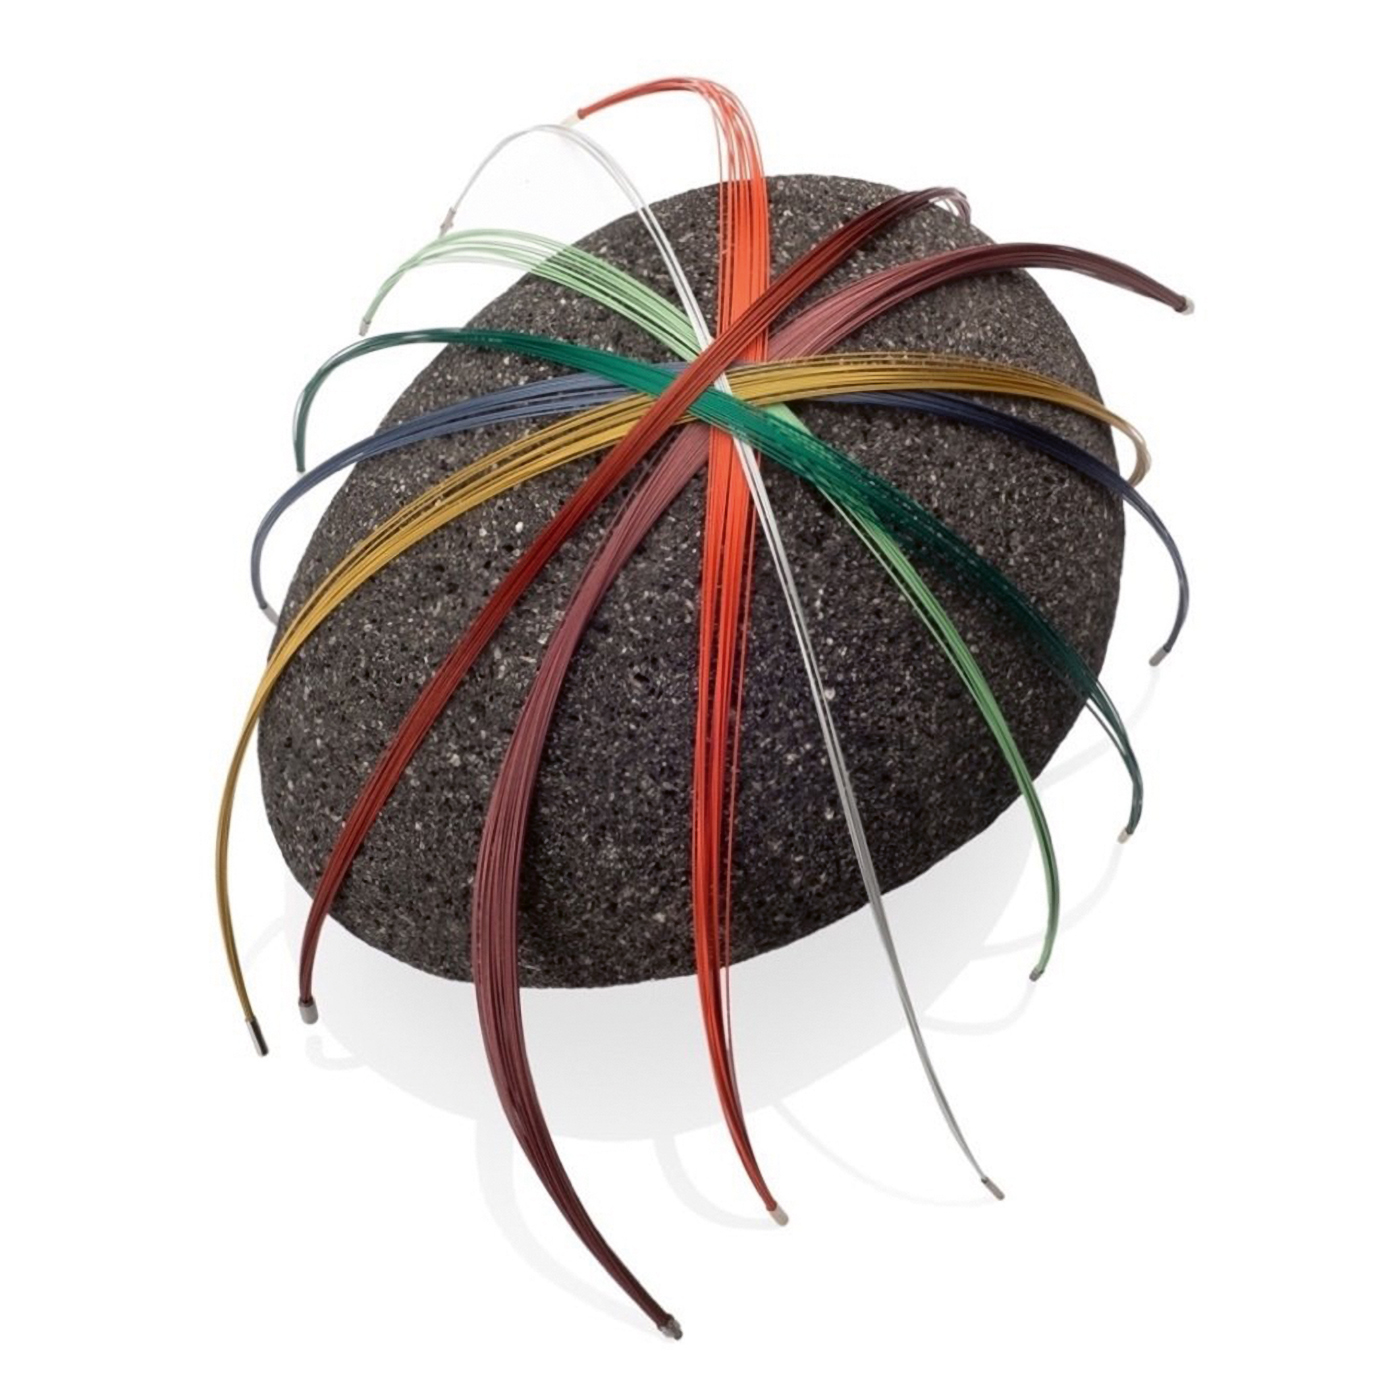 Seilcollier "Colour Cable", ES, schwarz, 12-reihig, 45 cm - 1 Stück